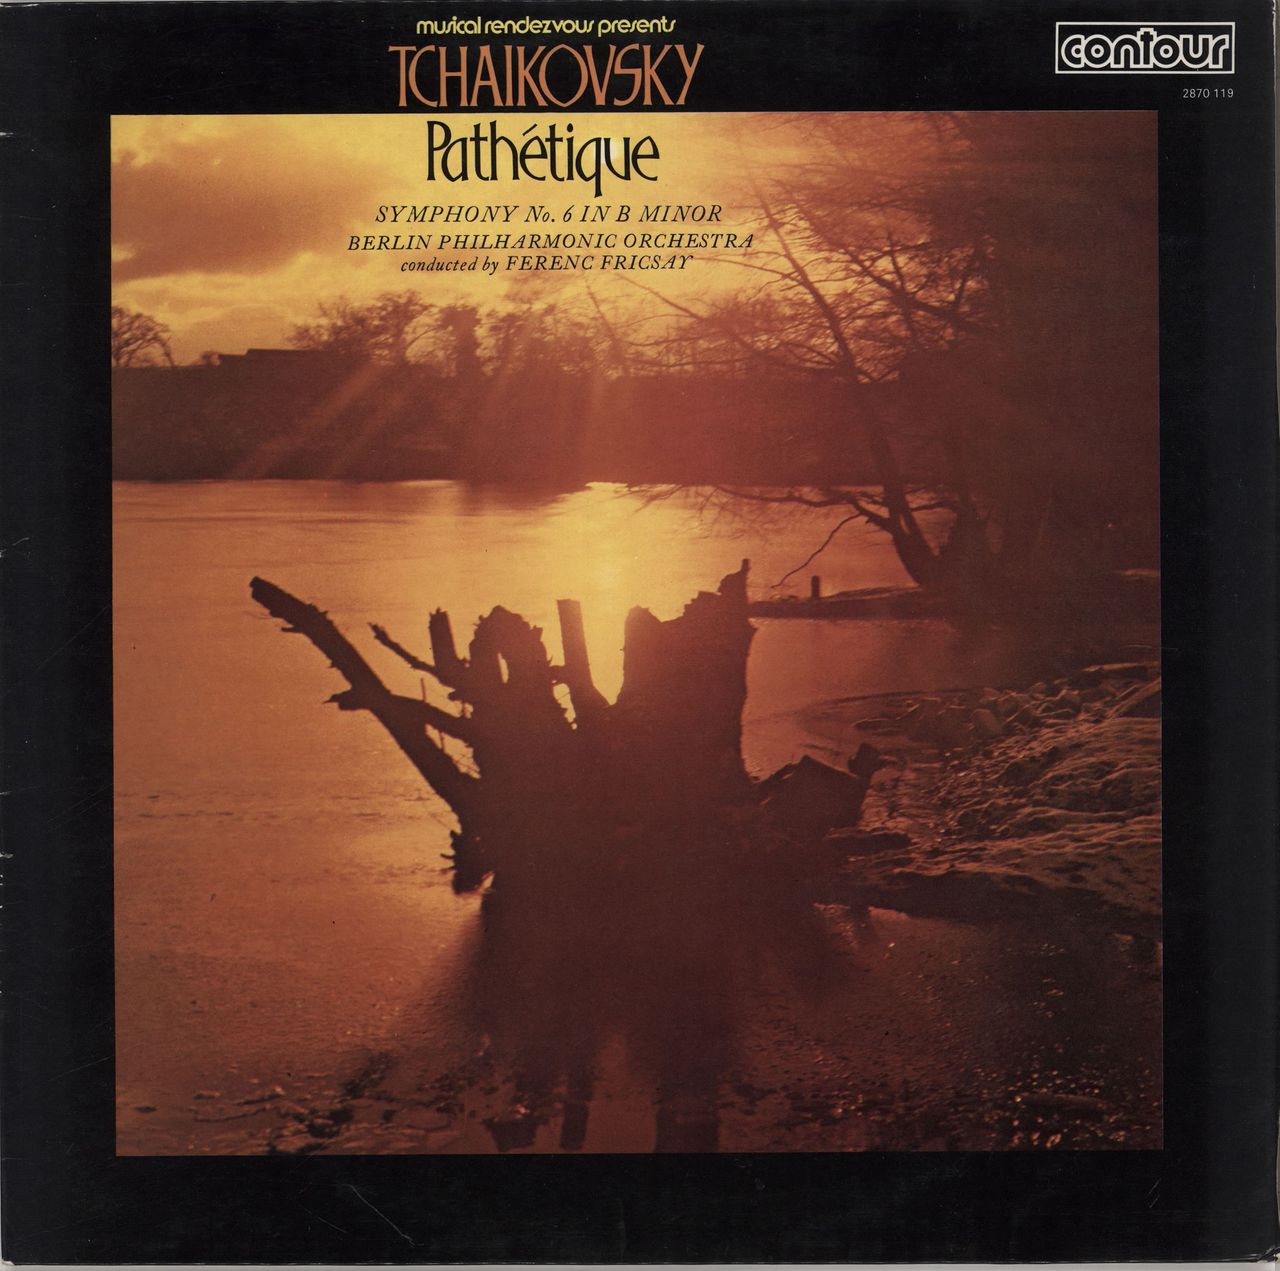 Pyotr Ilyich Tchaikovsky Pathétique: Symphony No. 6 in B Minor UK vinyl LP album (LP record) 2870119